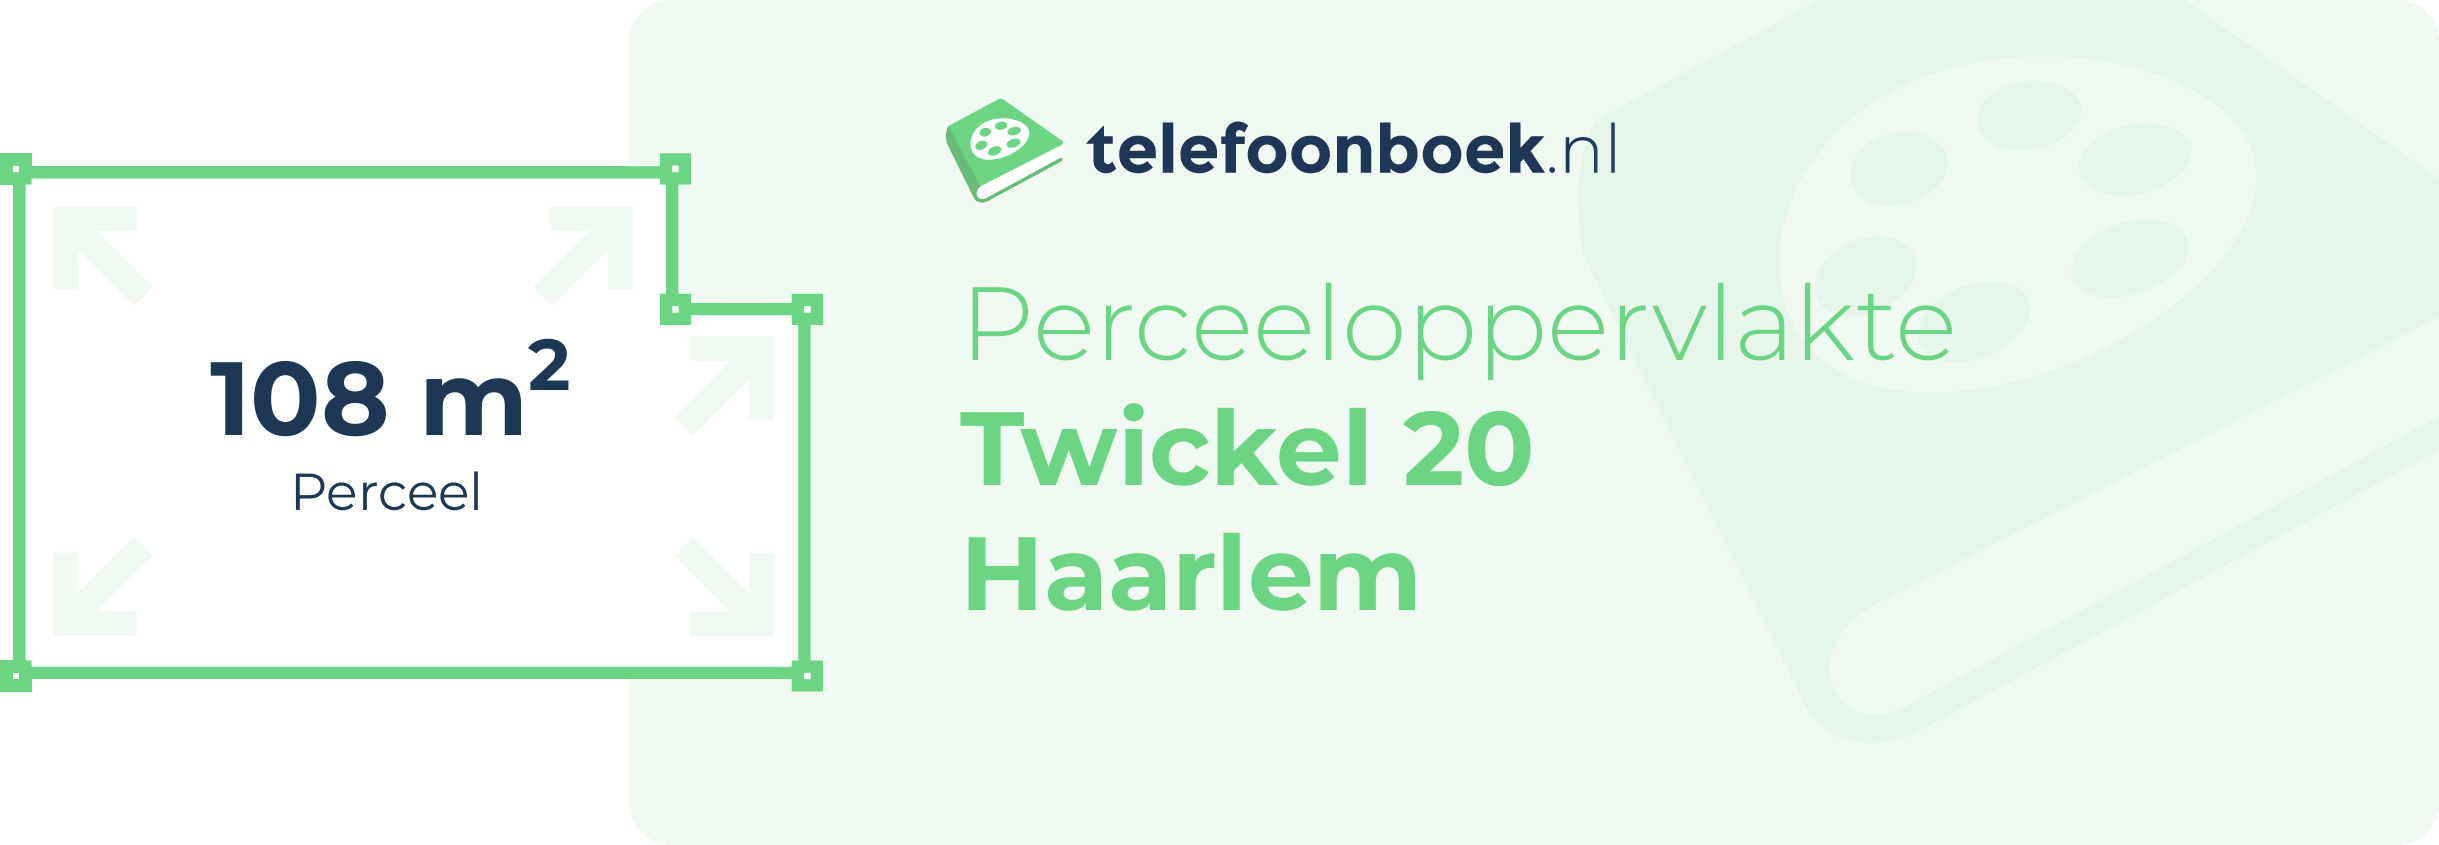 Perceeloppervlakte Twickel 20 Haarlem